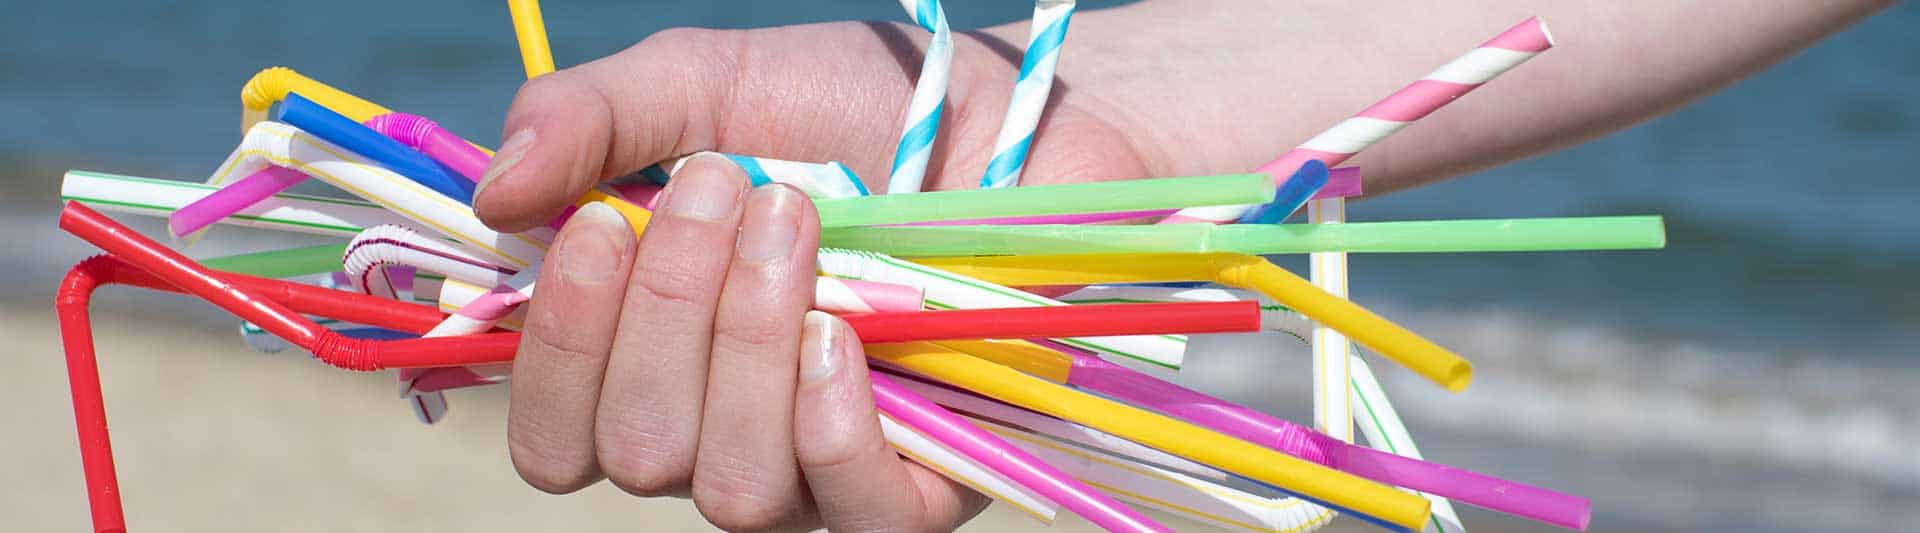 Plastic Straws Environmental Impact - Why Are Straws Bad?